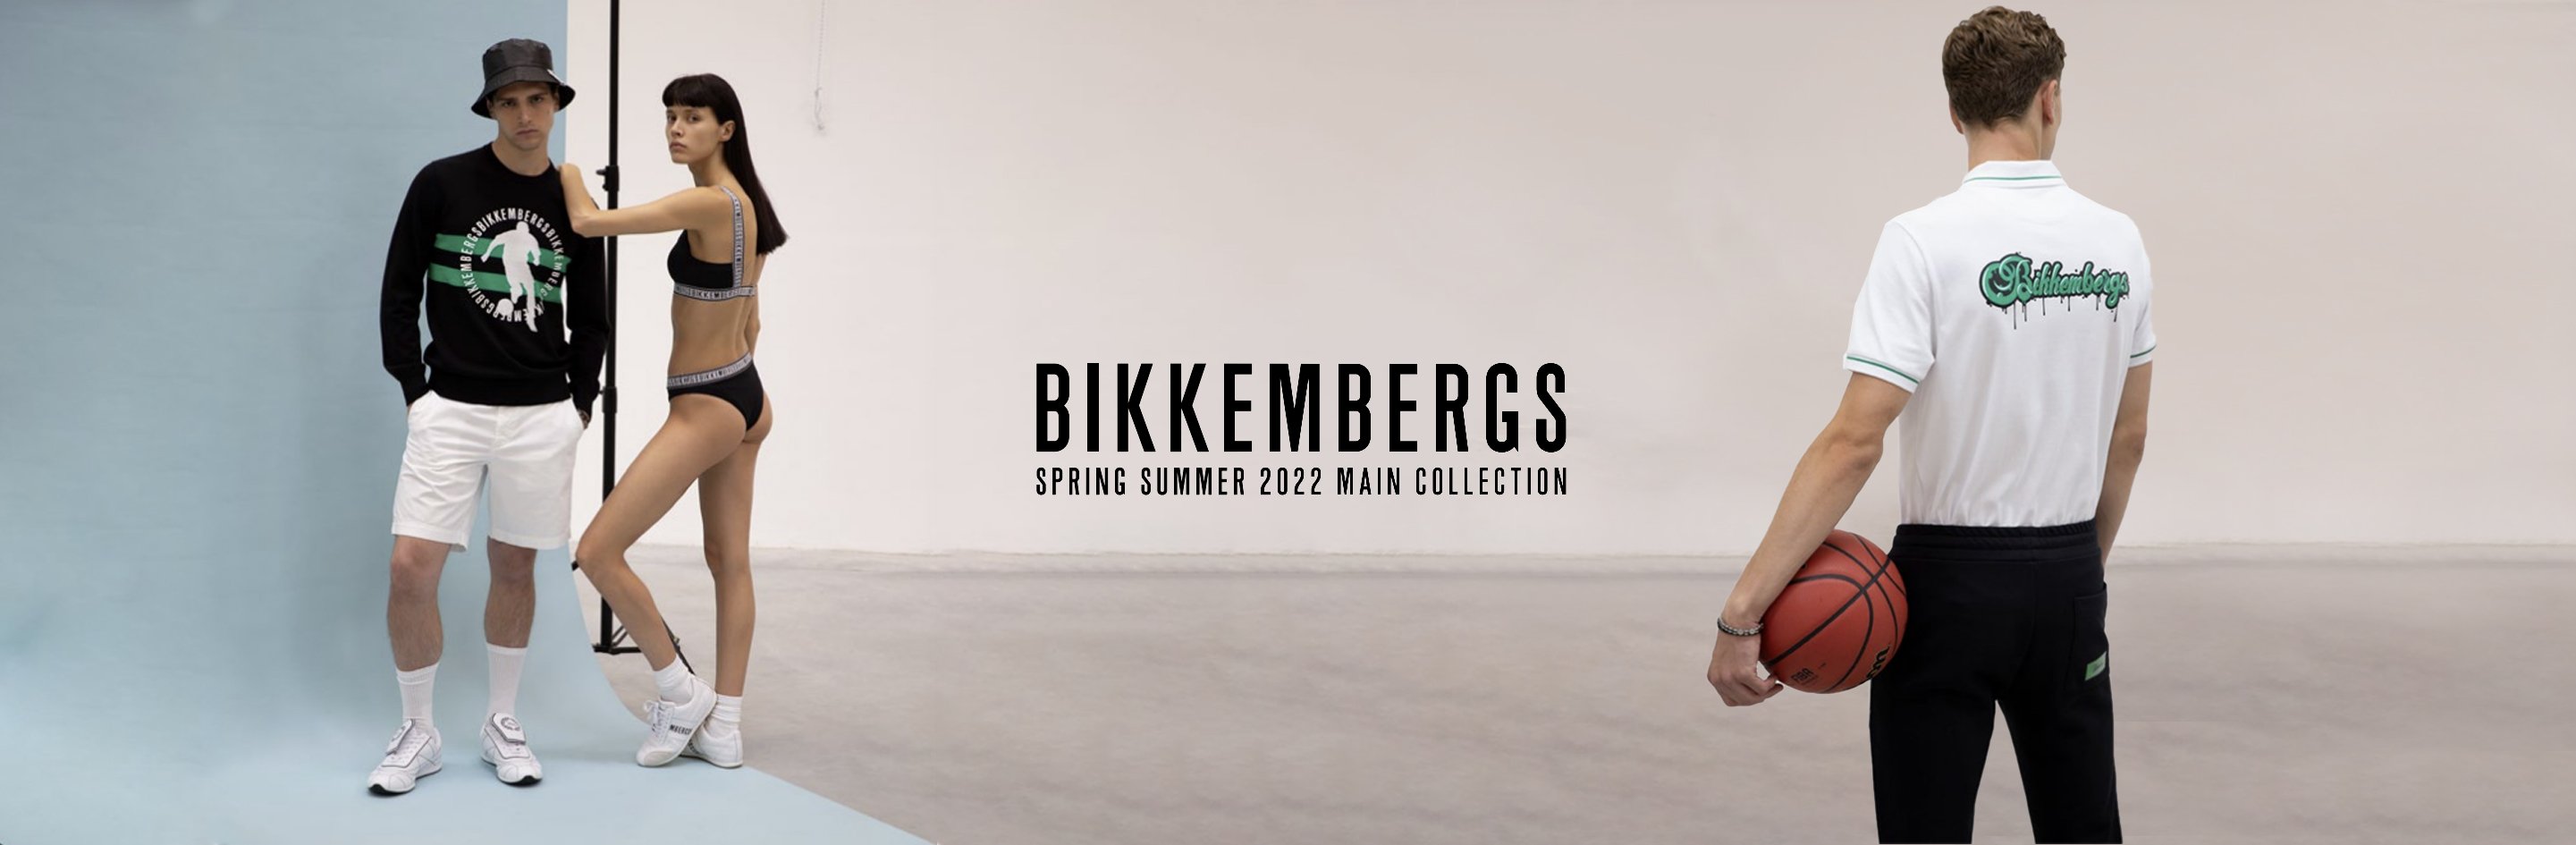 Новая коллекция Bikkimbergs